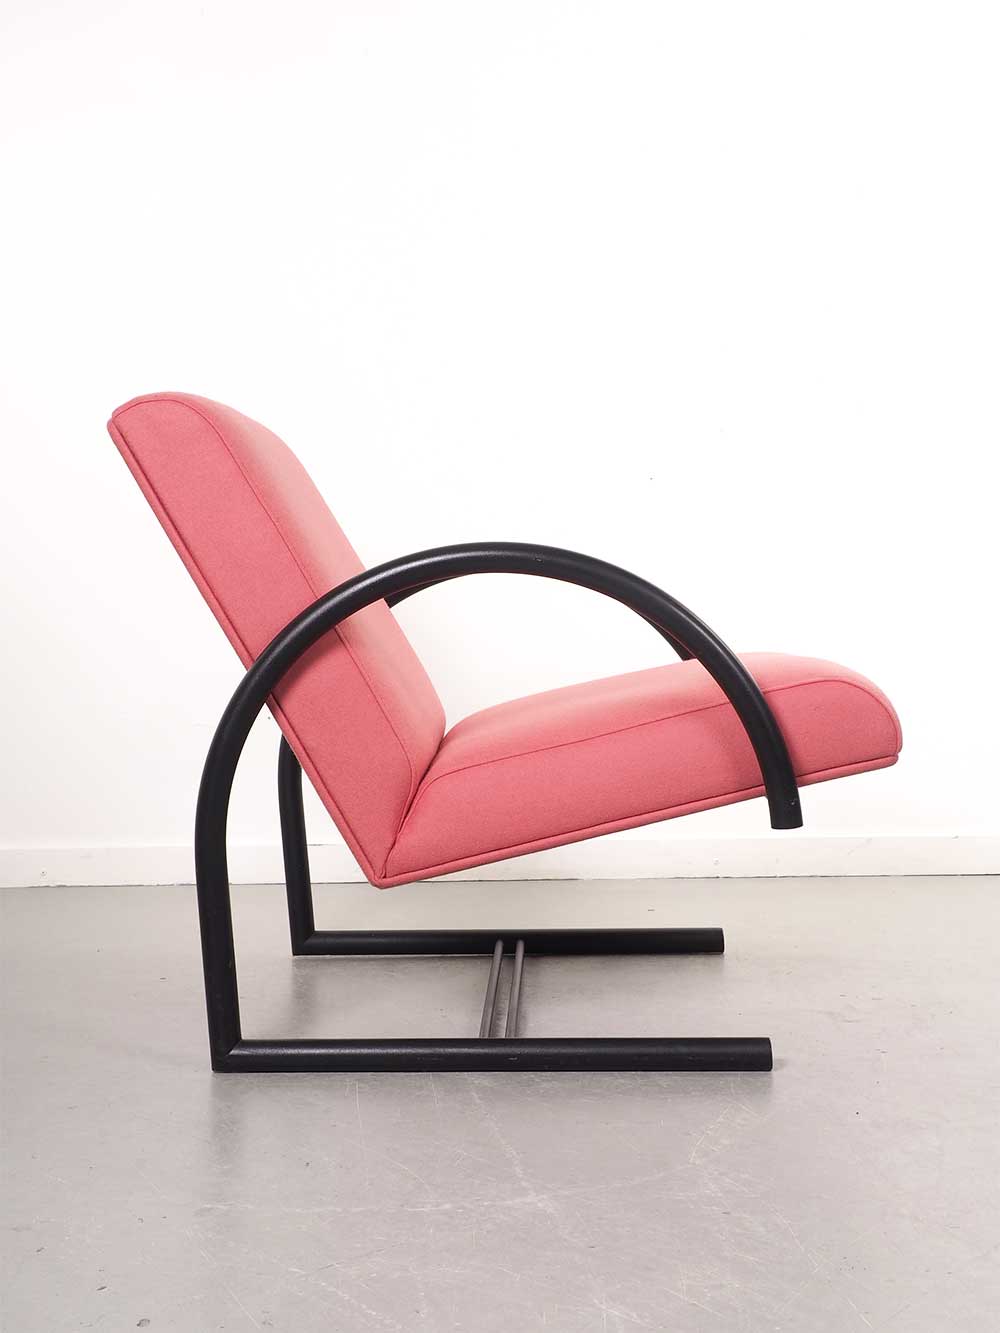 Roze fauteuil de Cirkel Mazairac en Boonzaaijer 80s Hennie de Jong